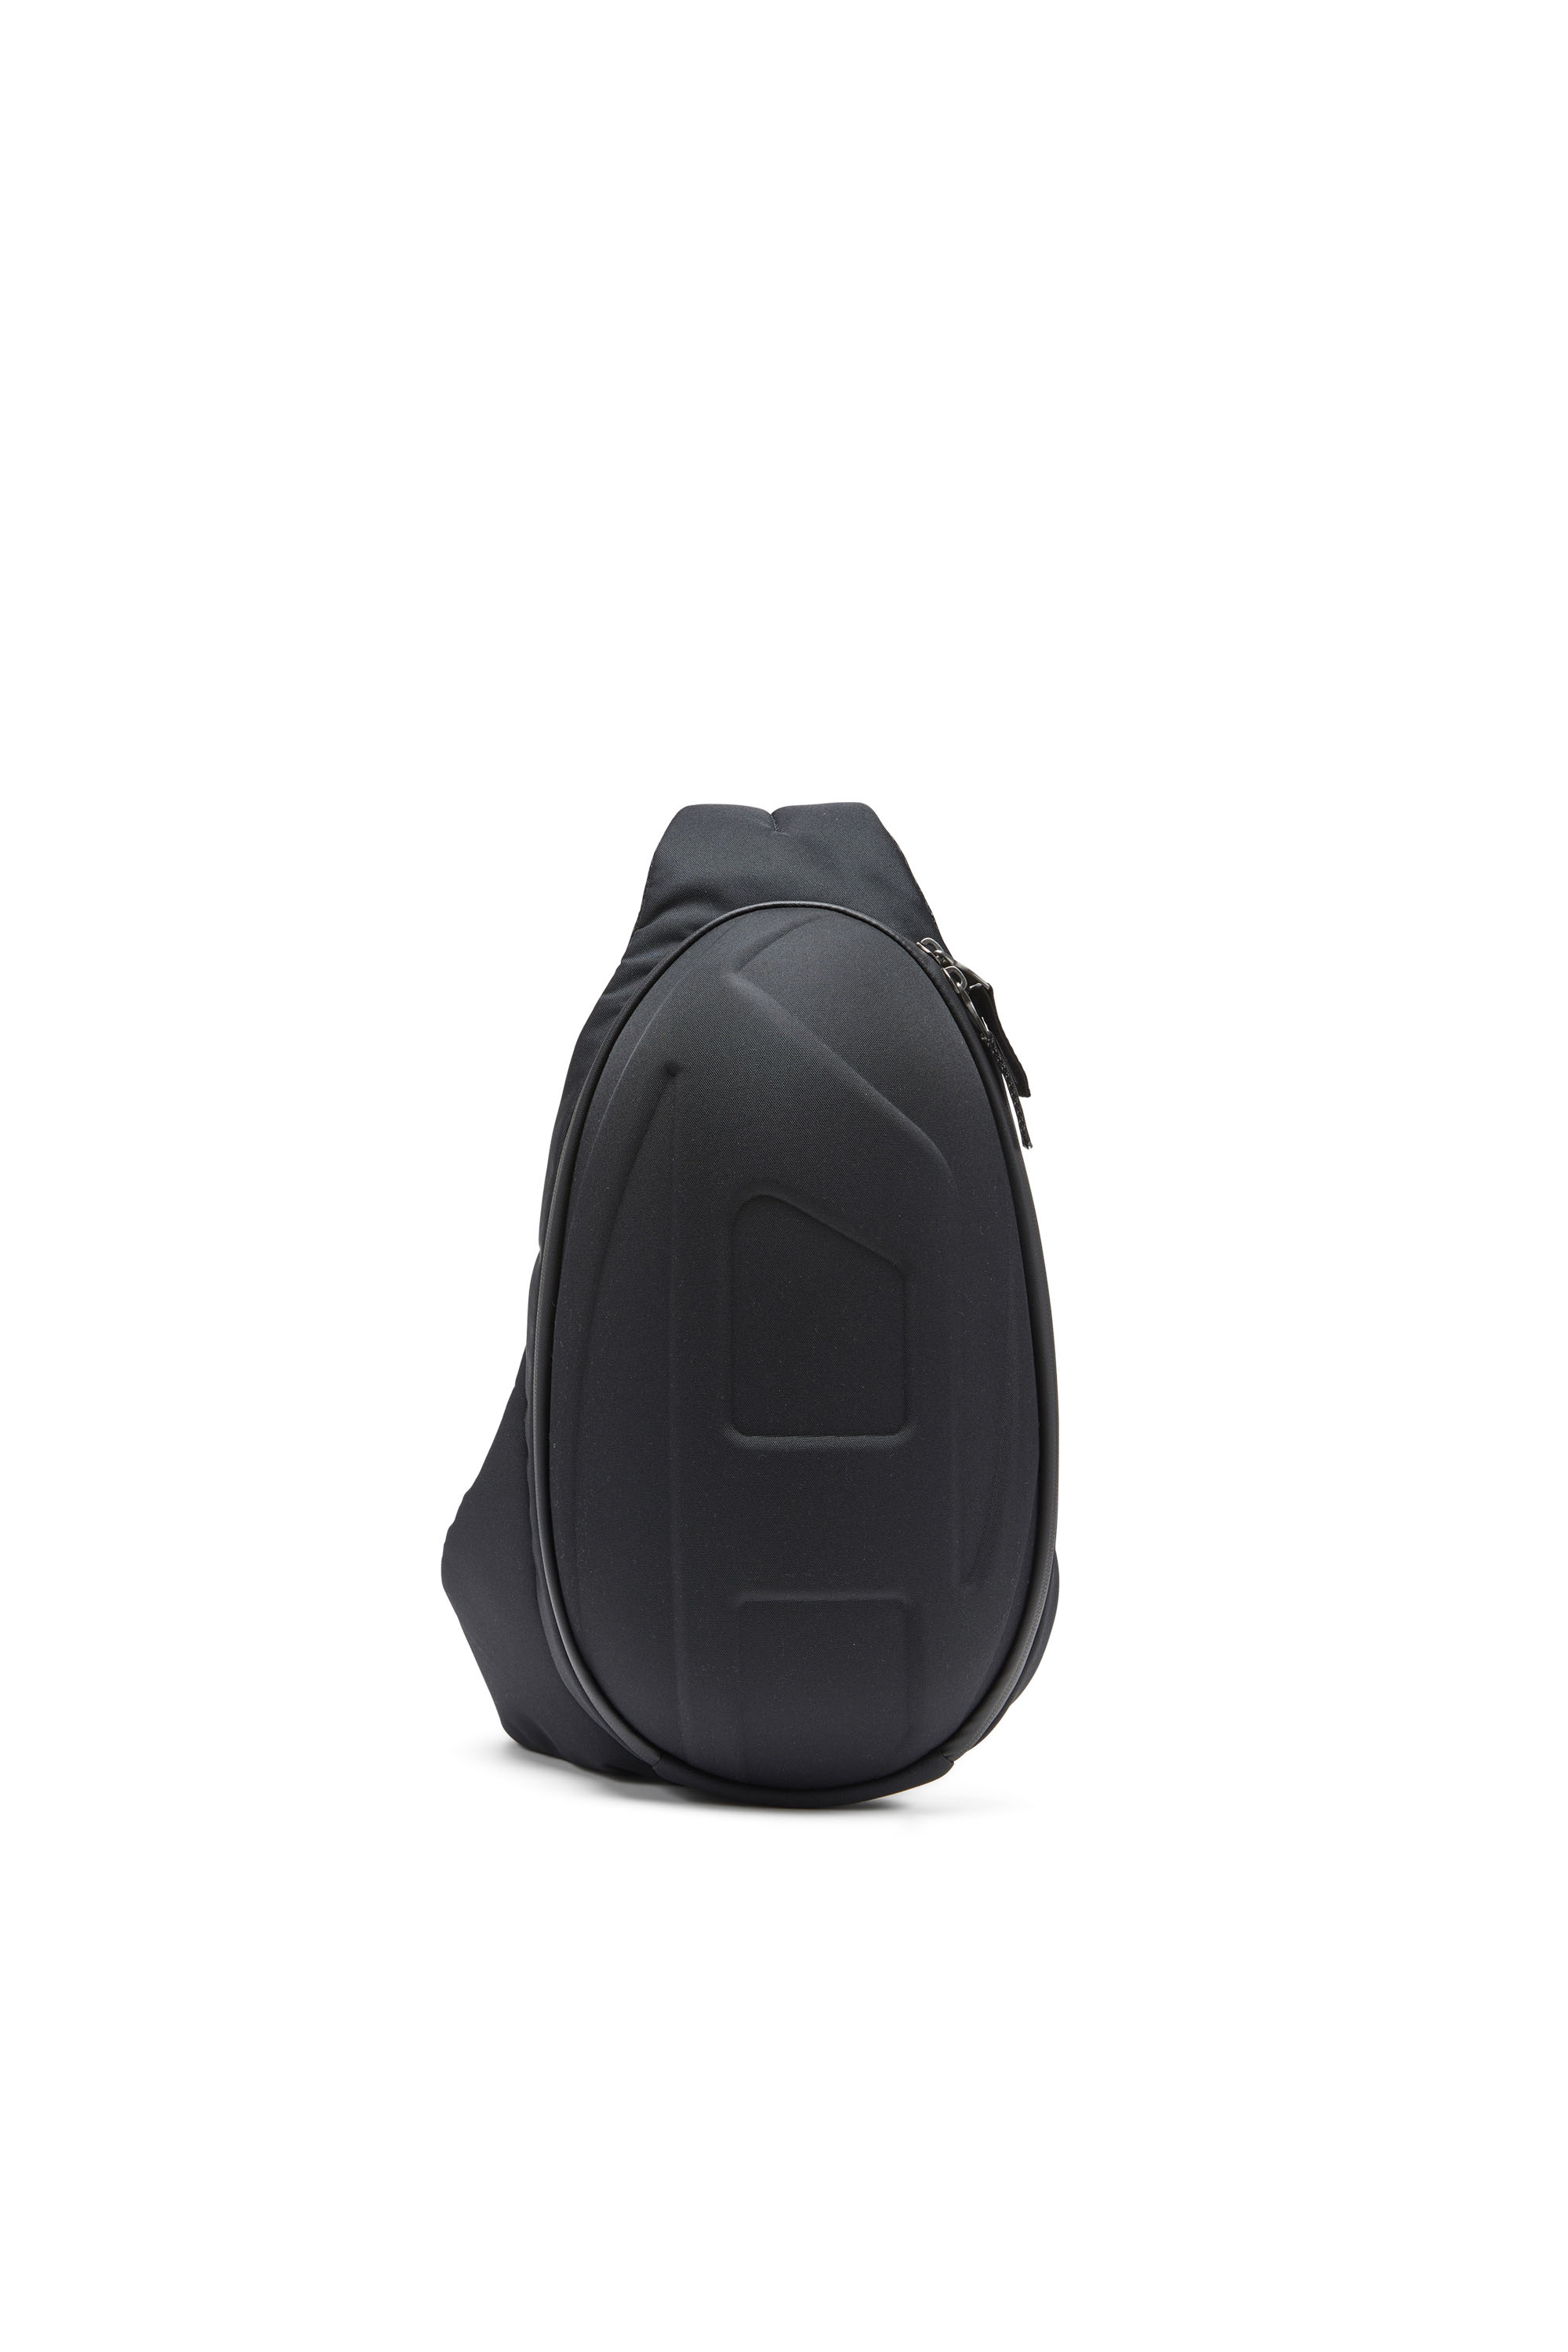 Diesel - 1DR-POD SLING BAG, Male 1DR-Pod-Hard shell sling bag in ブラック - Image 1